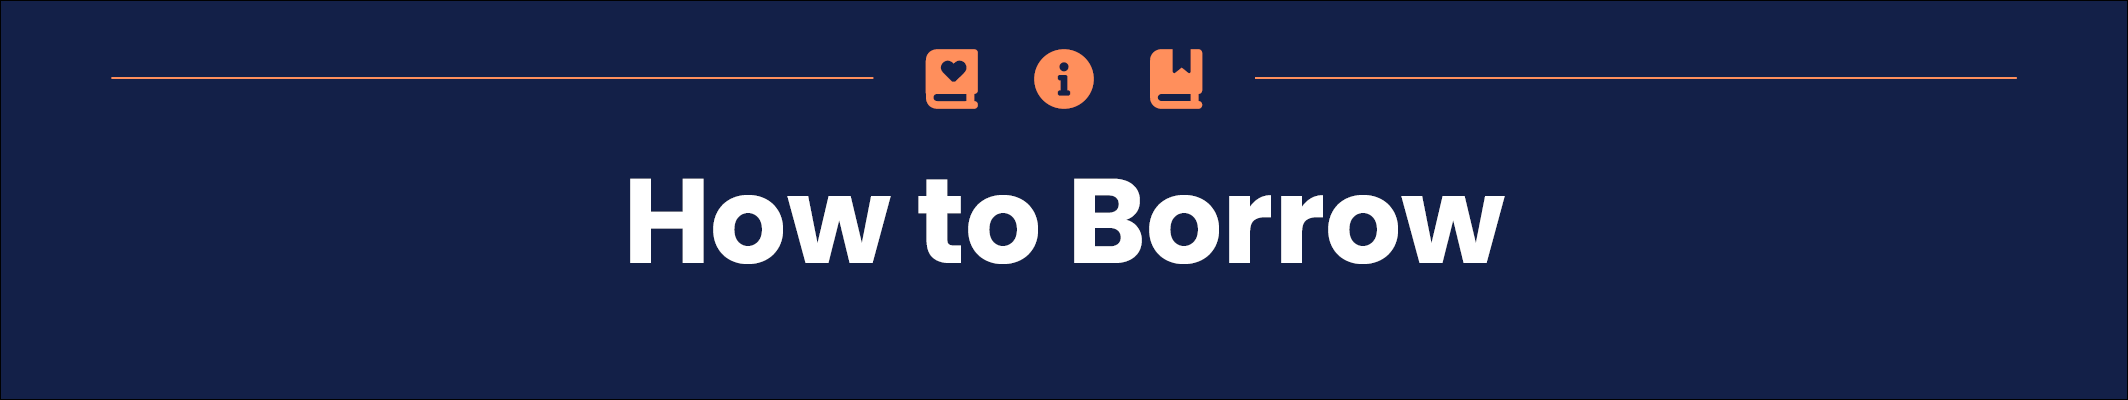 How to Borrow Banner